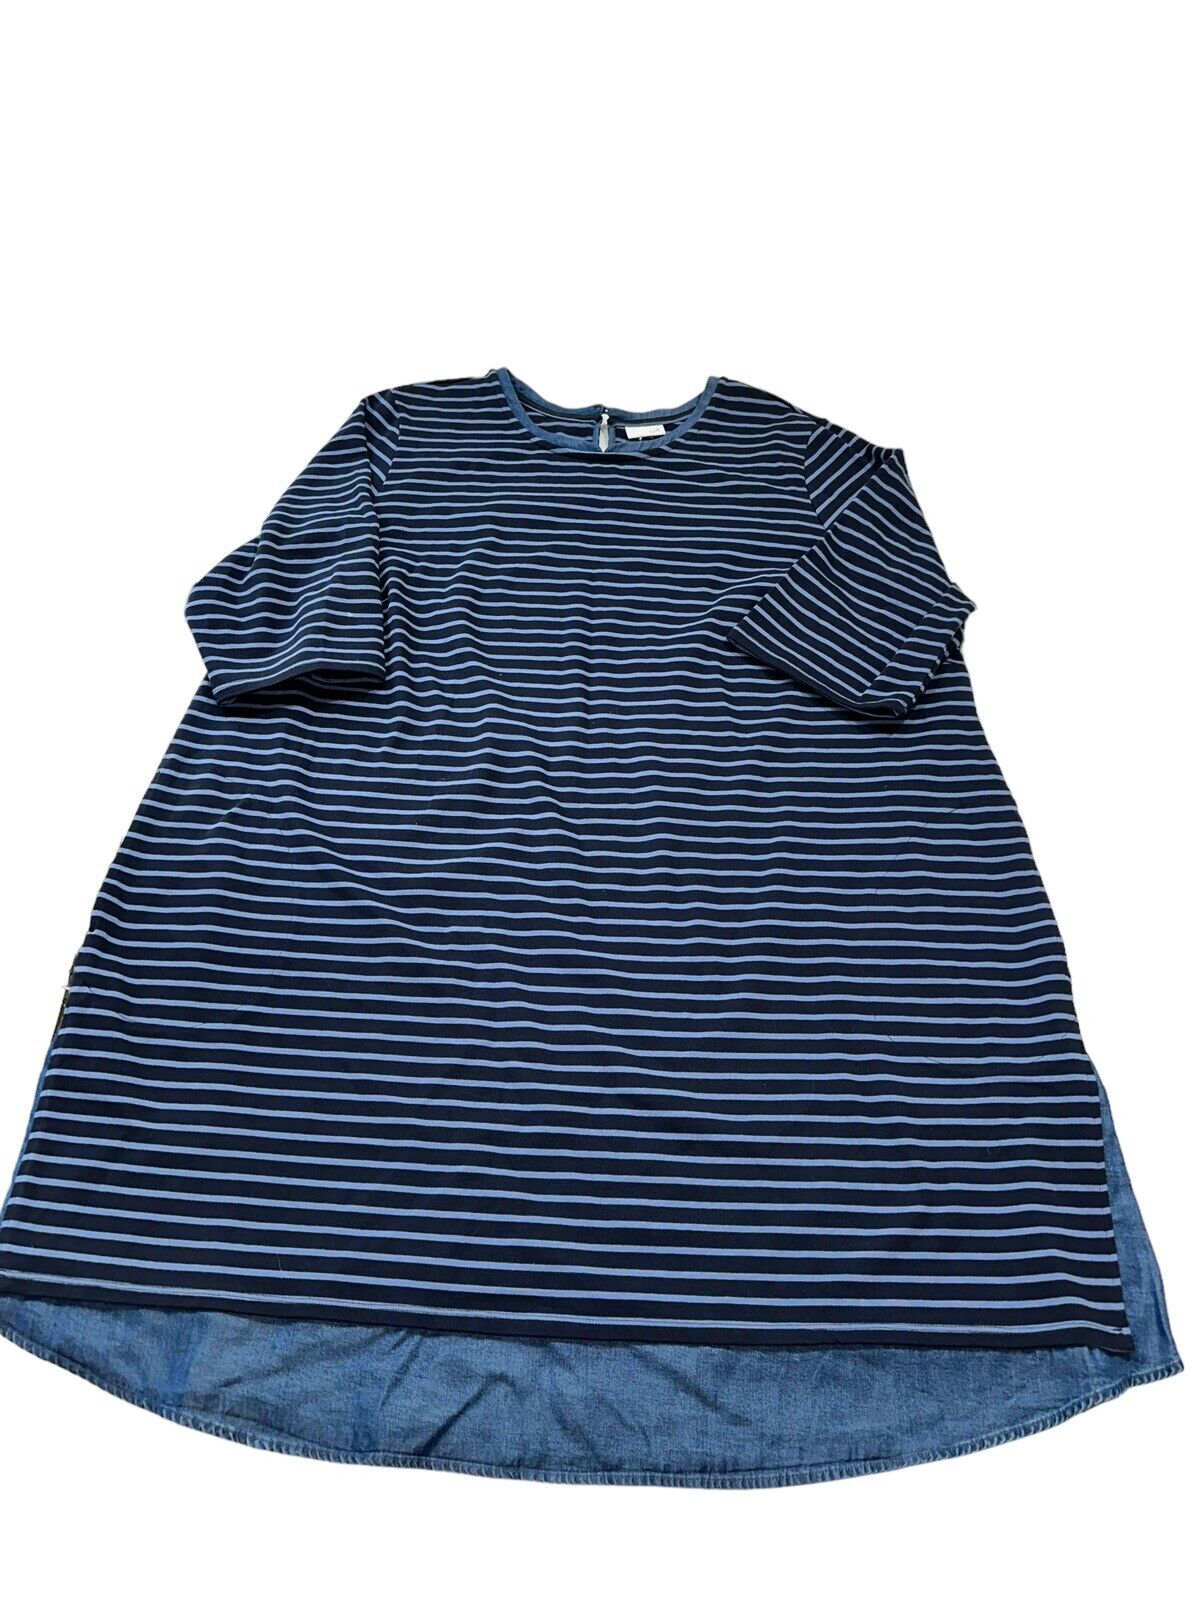 J. Jill Navy Blue Striped Layered LooK Dress 3/4 Sleeves Sz 4X Dress - DR  Trouble